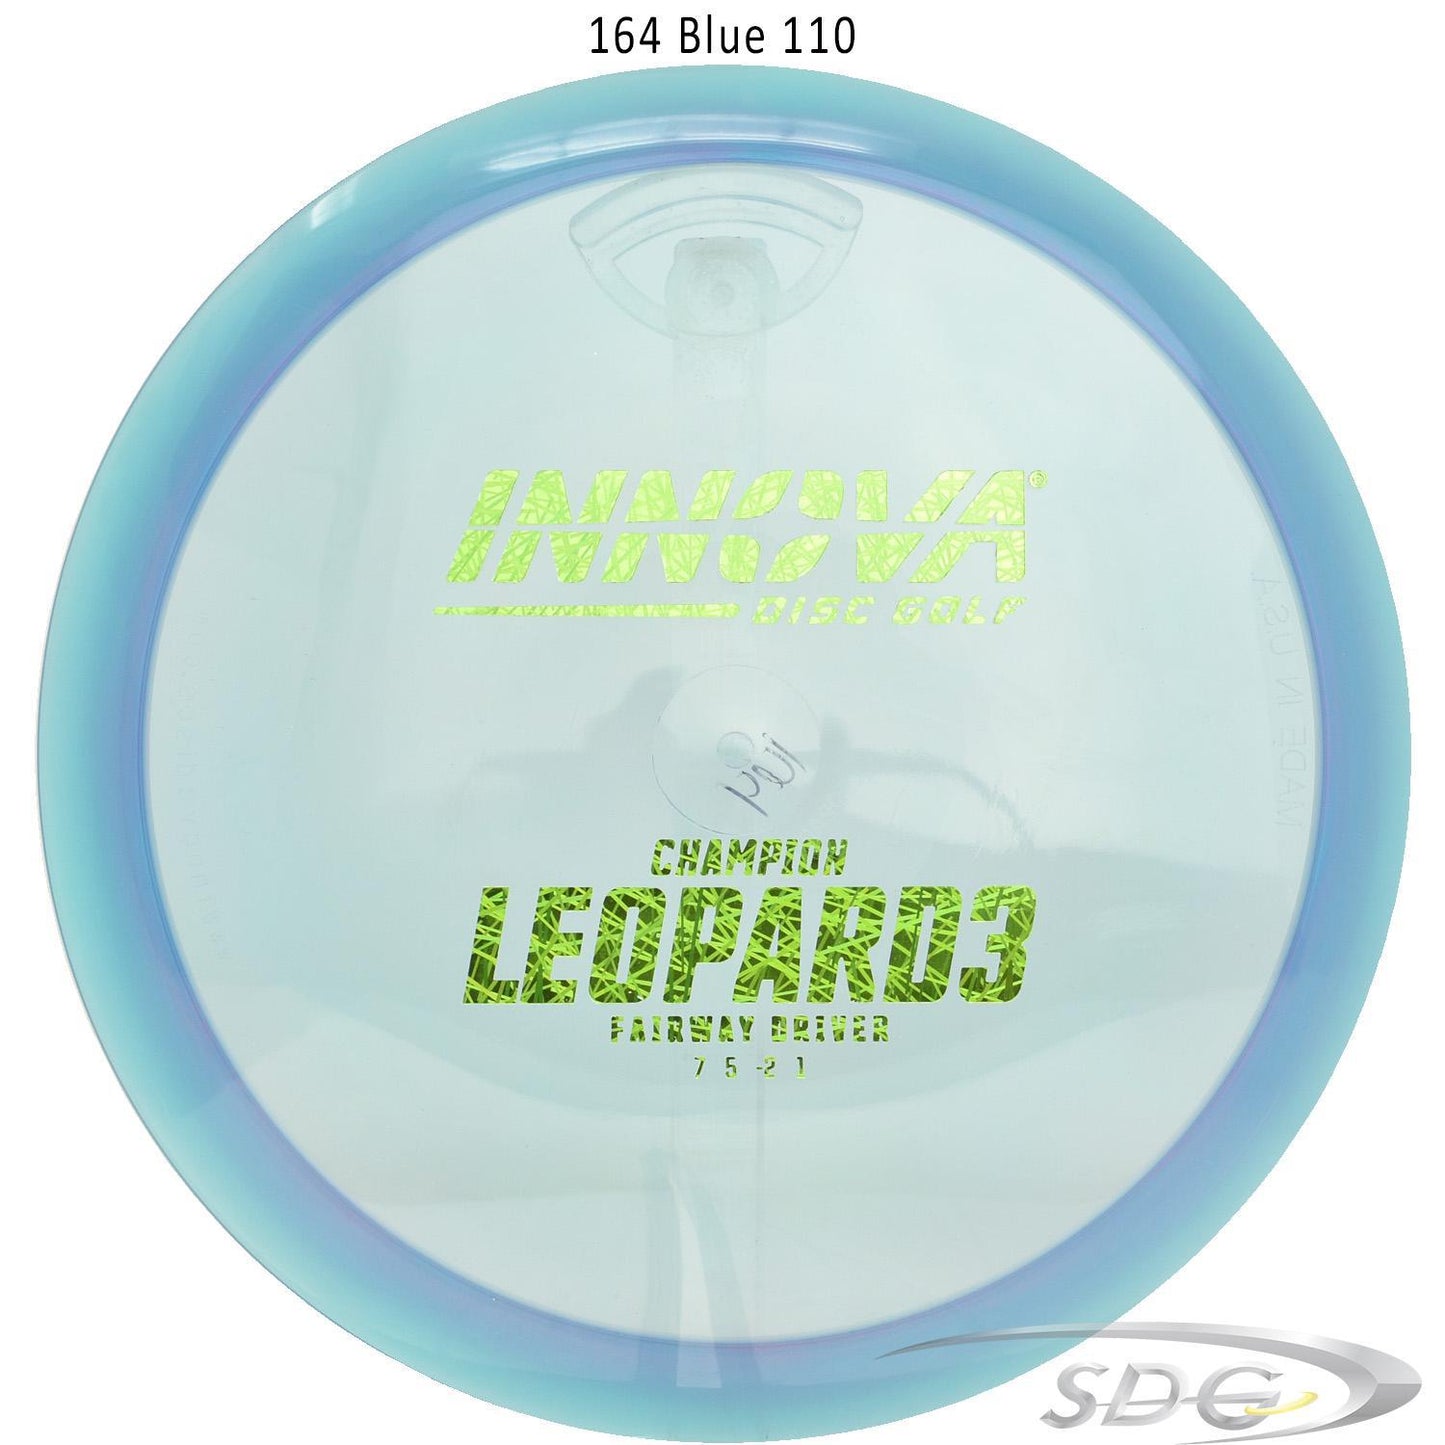 innova-champion-leopard3-disc-golf-fairway-driver 164 Blue 110 